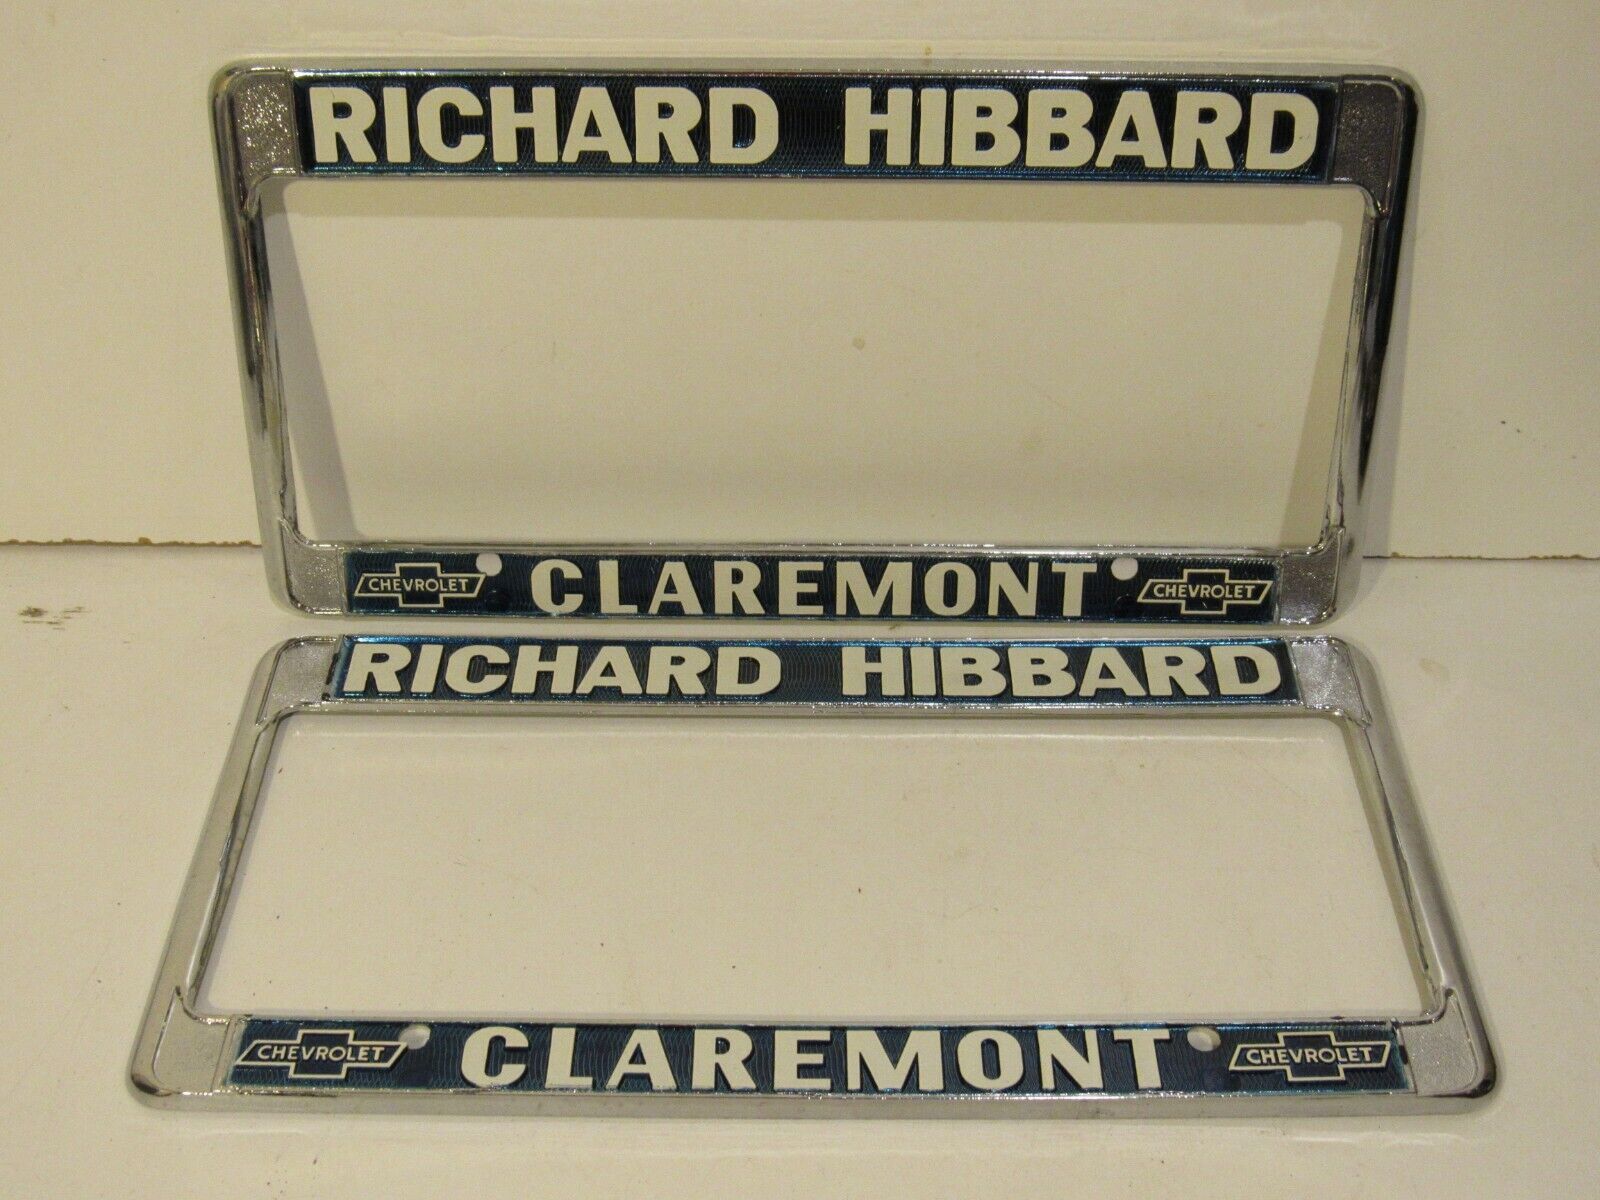  Set Richard Hibbard Claremont Chevrolet License Plate Frames Pair Embossed 